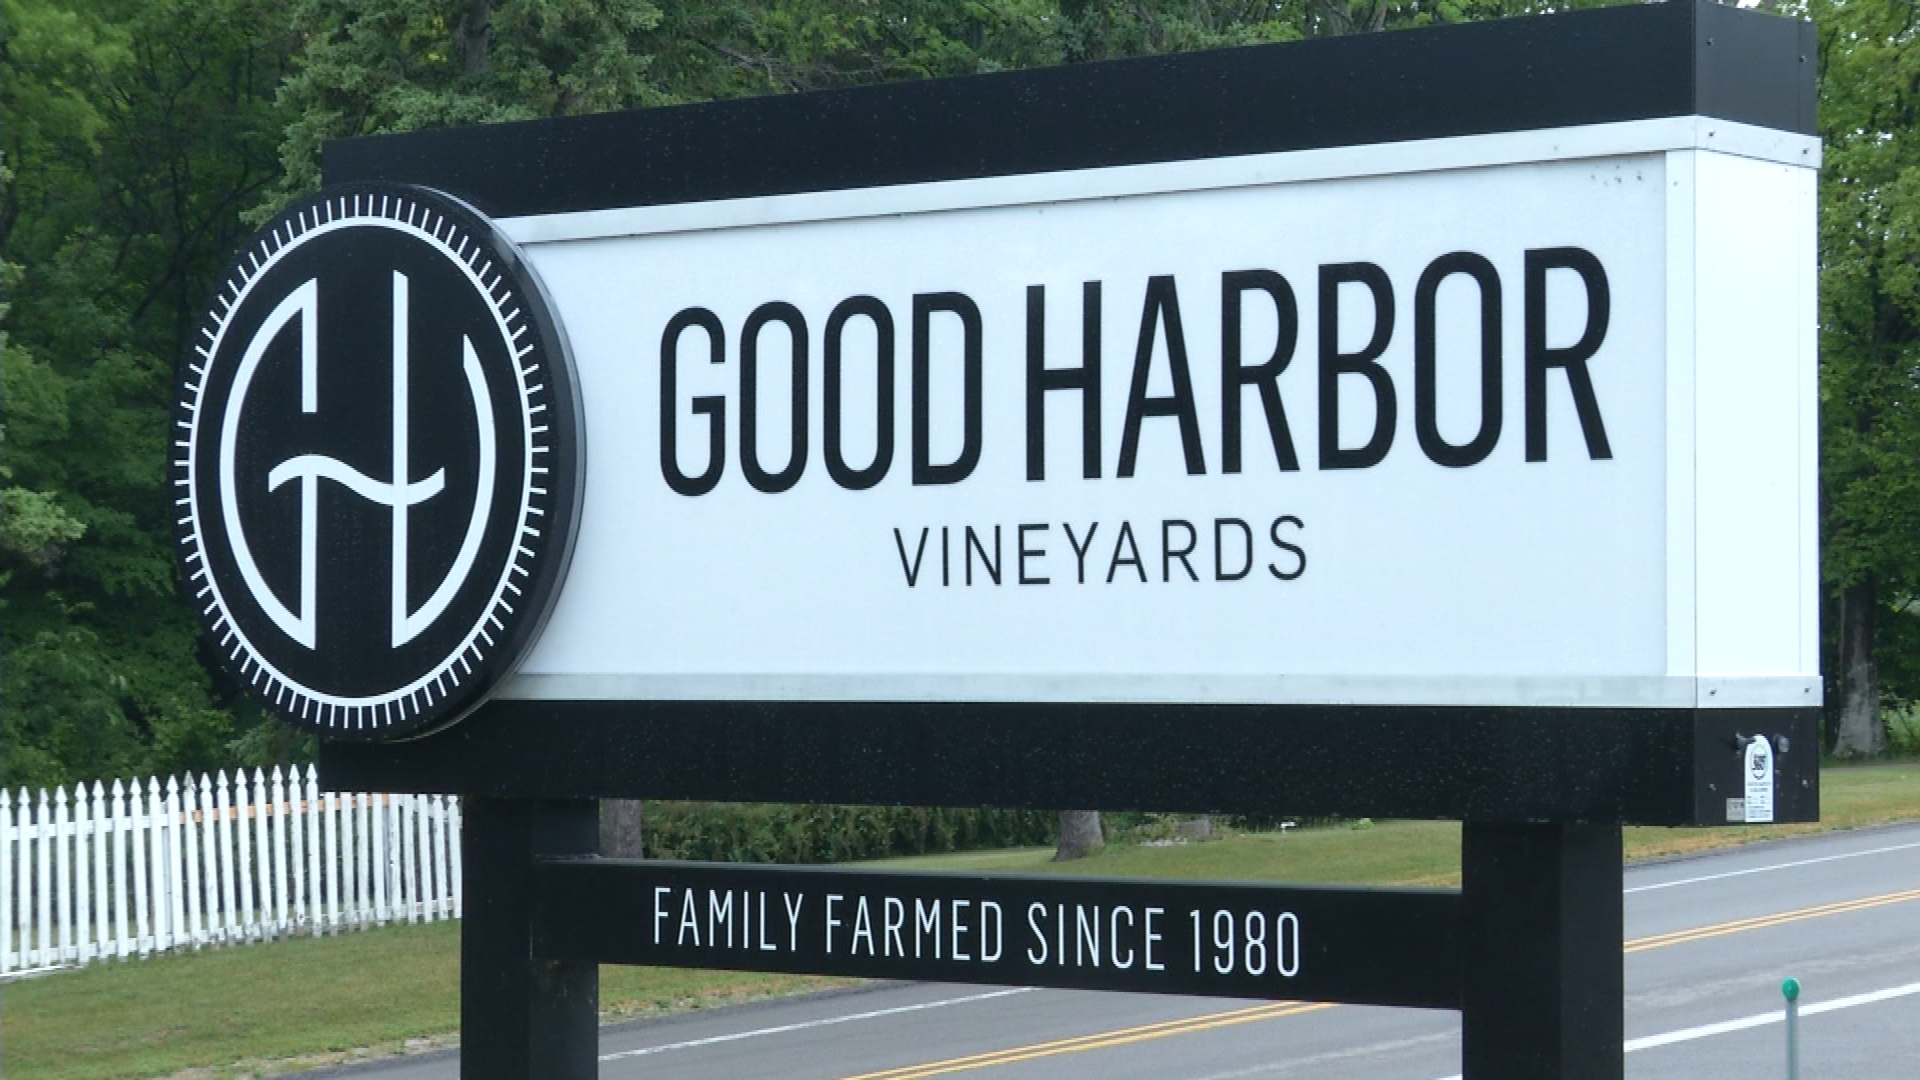 Good Harbor Vineyards 1